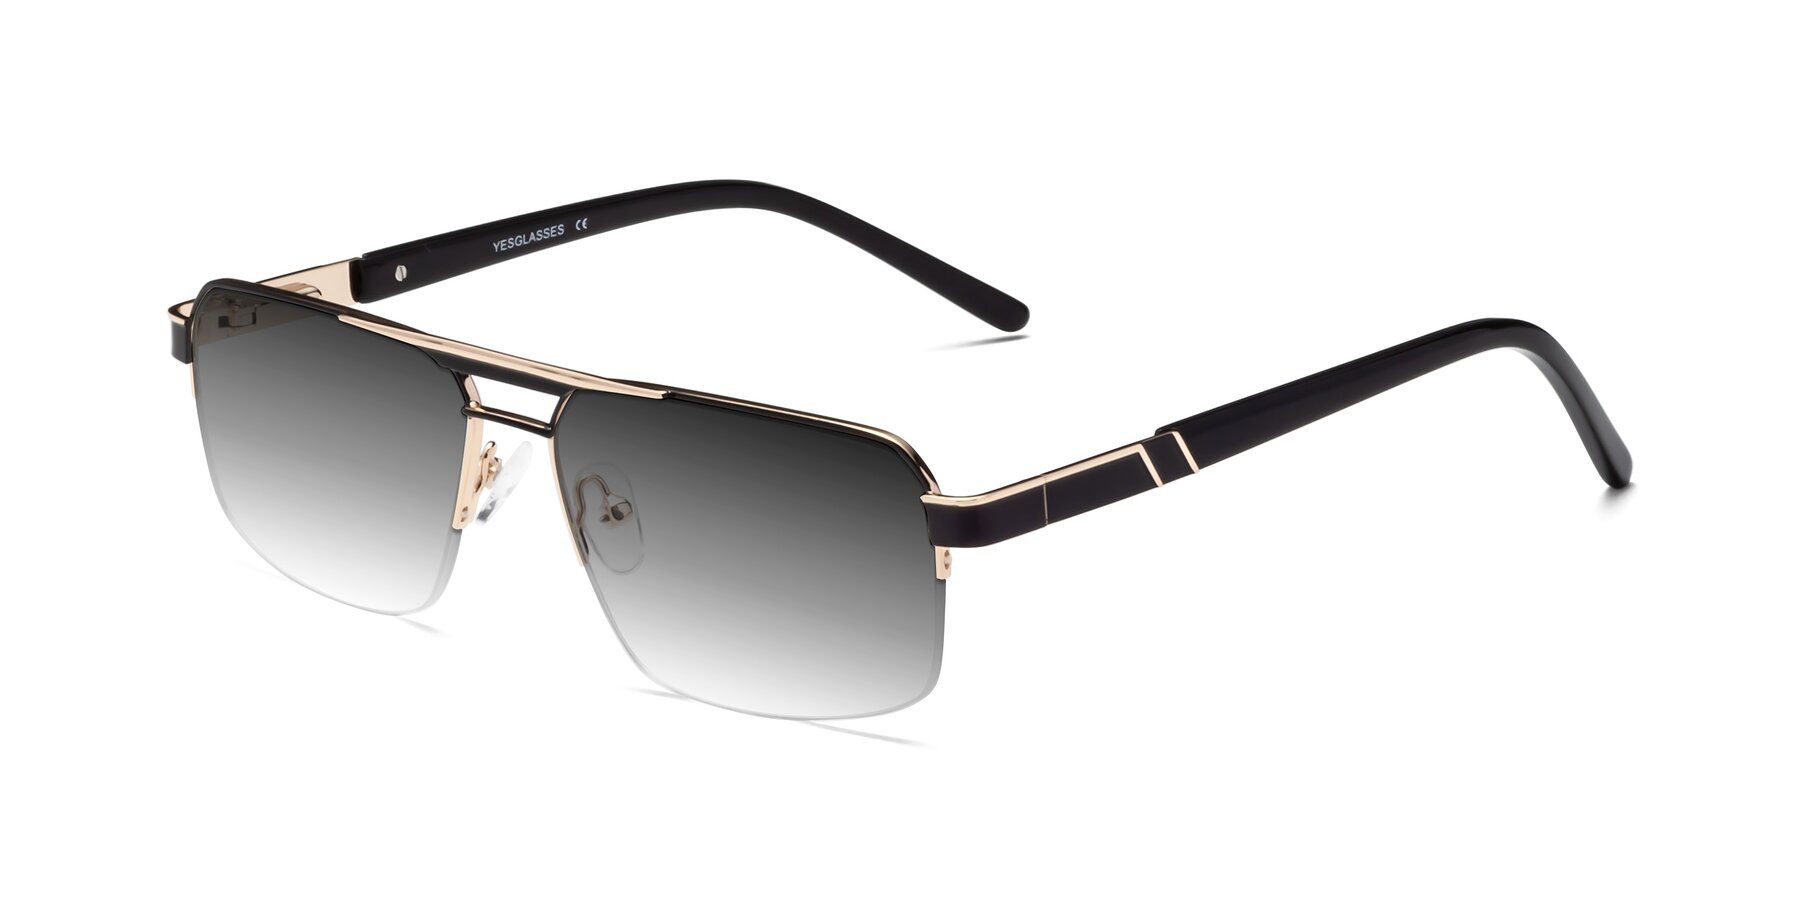 Black-Gold Double Bridge Classic Semi-Rimless Gradient Sunglasses with Gray Sunwear Lenses